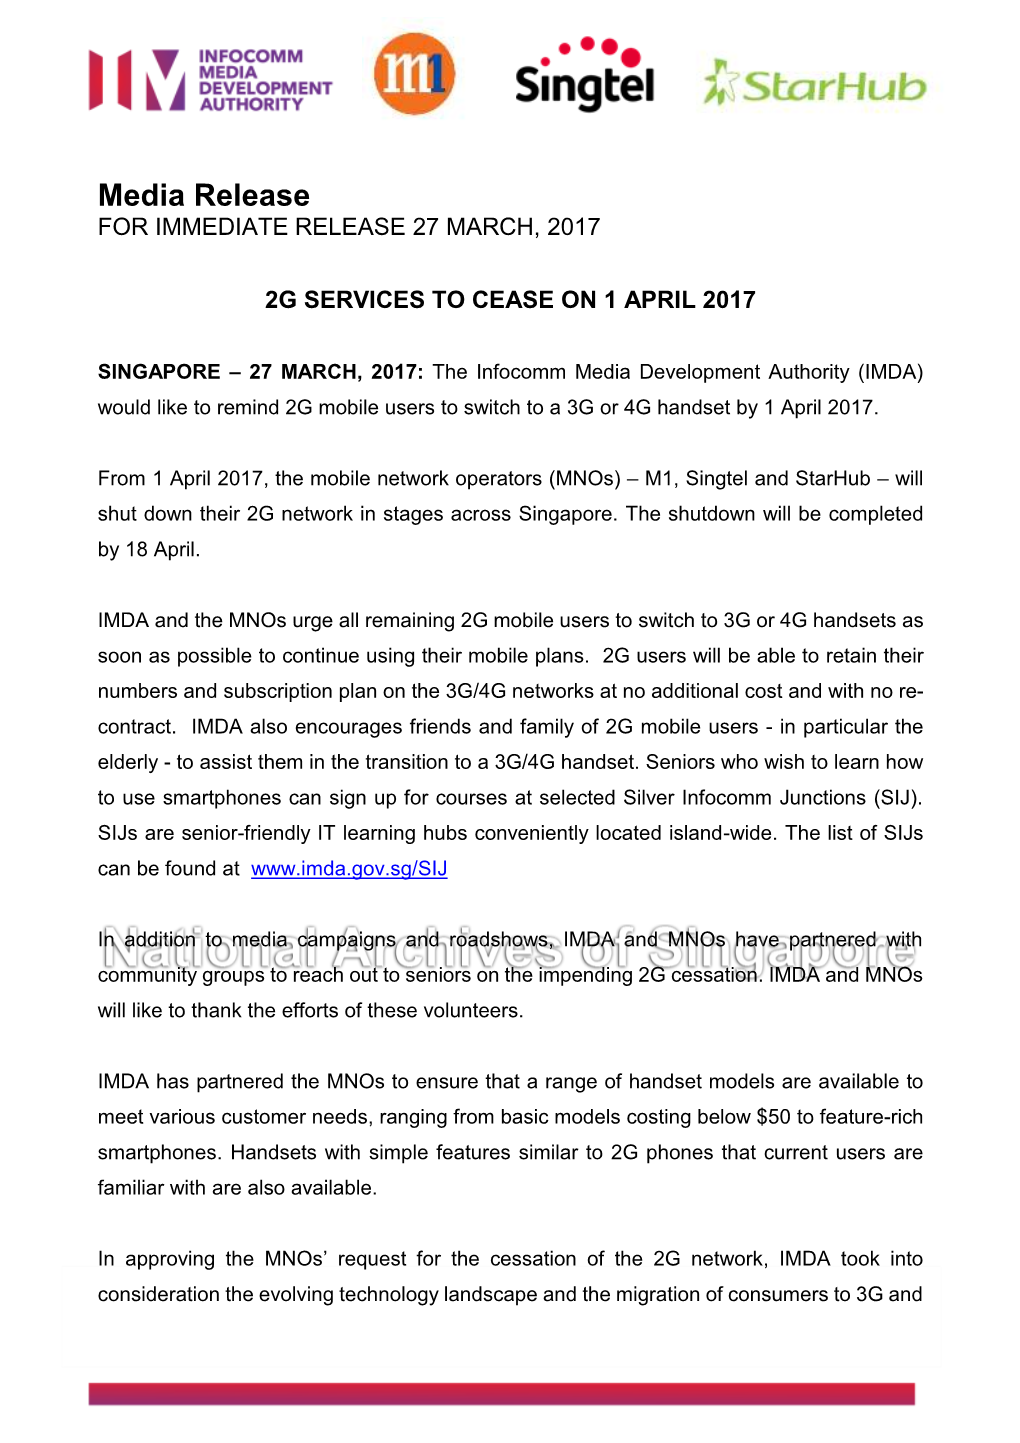 Media Release for IMMEDIATE RELEASE 27 MARCH, 2017